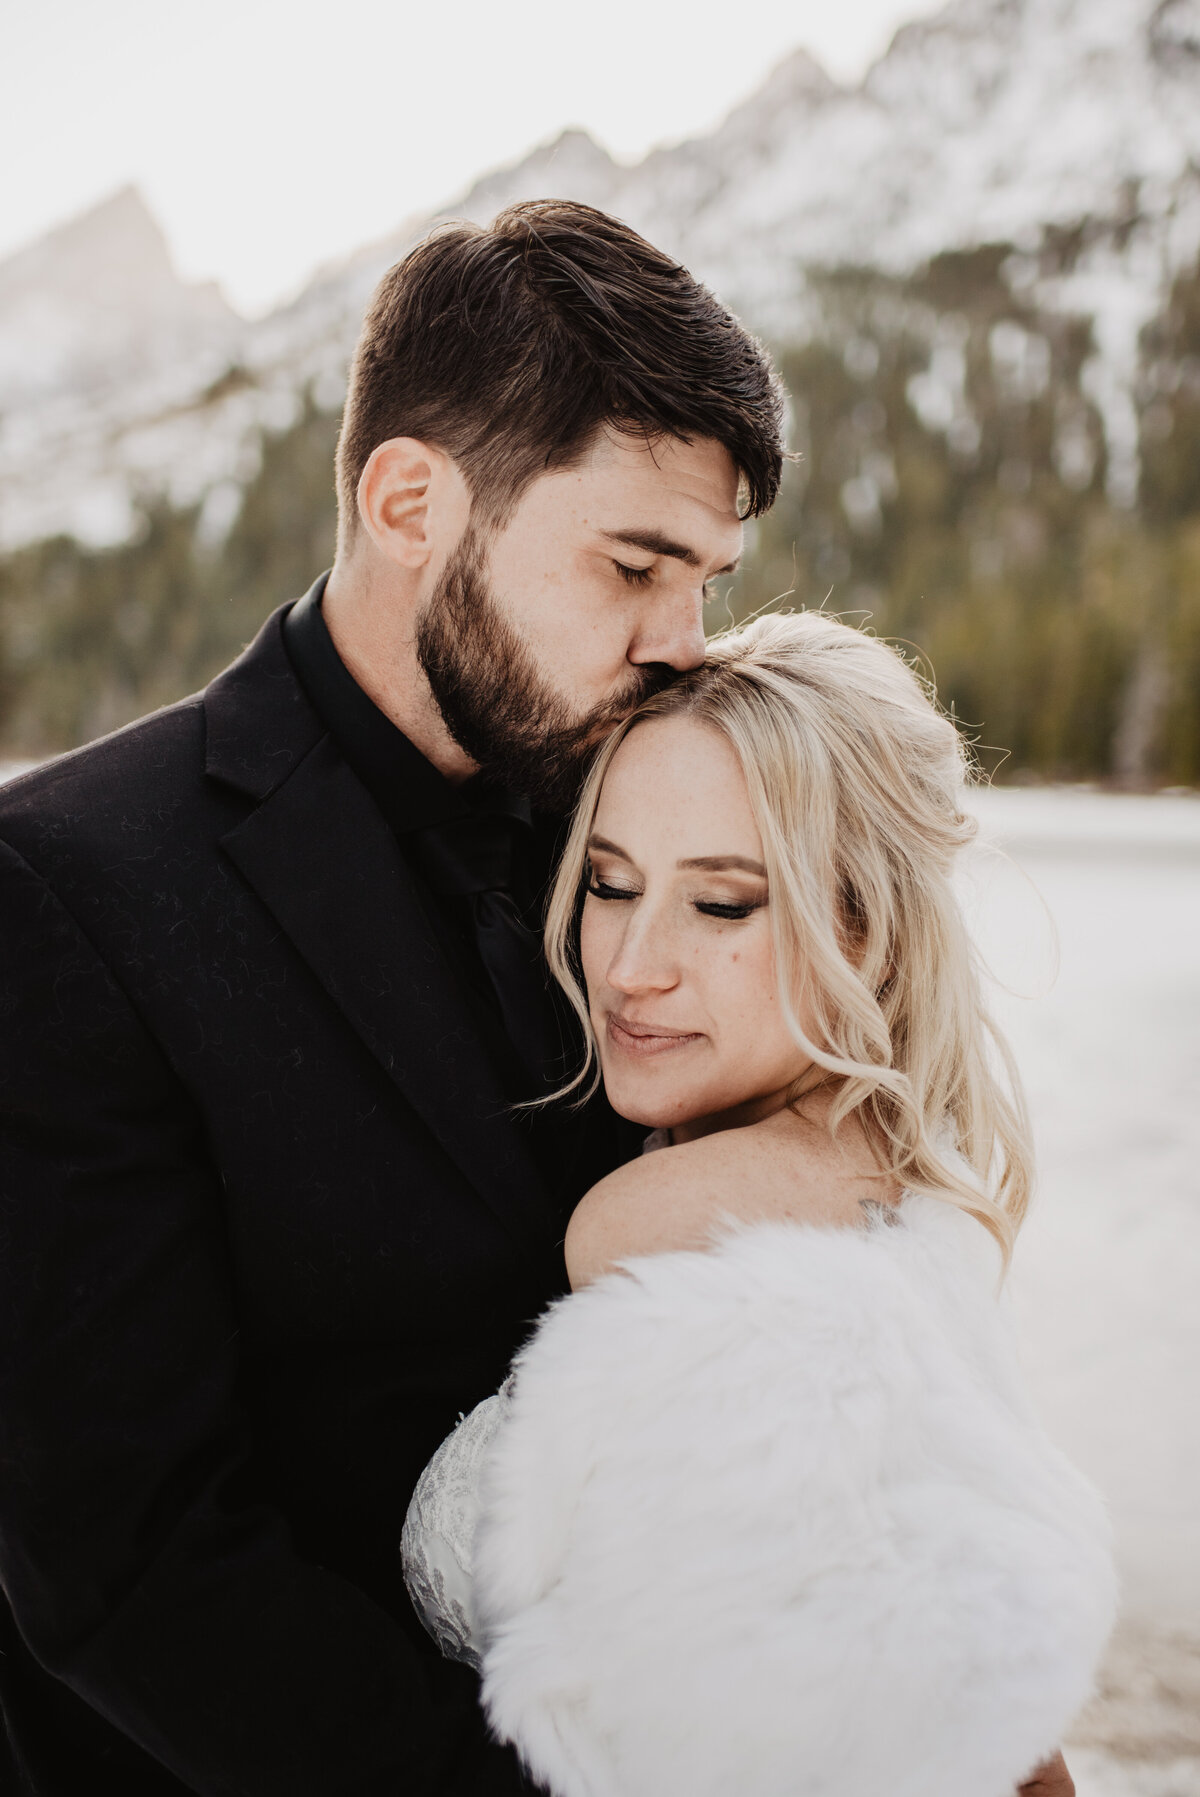 Jackson Hole Photographers capture couple snuggling during winter elopement photos